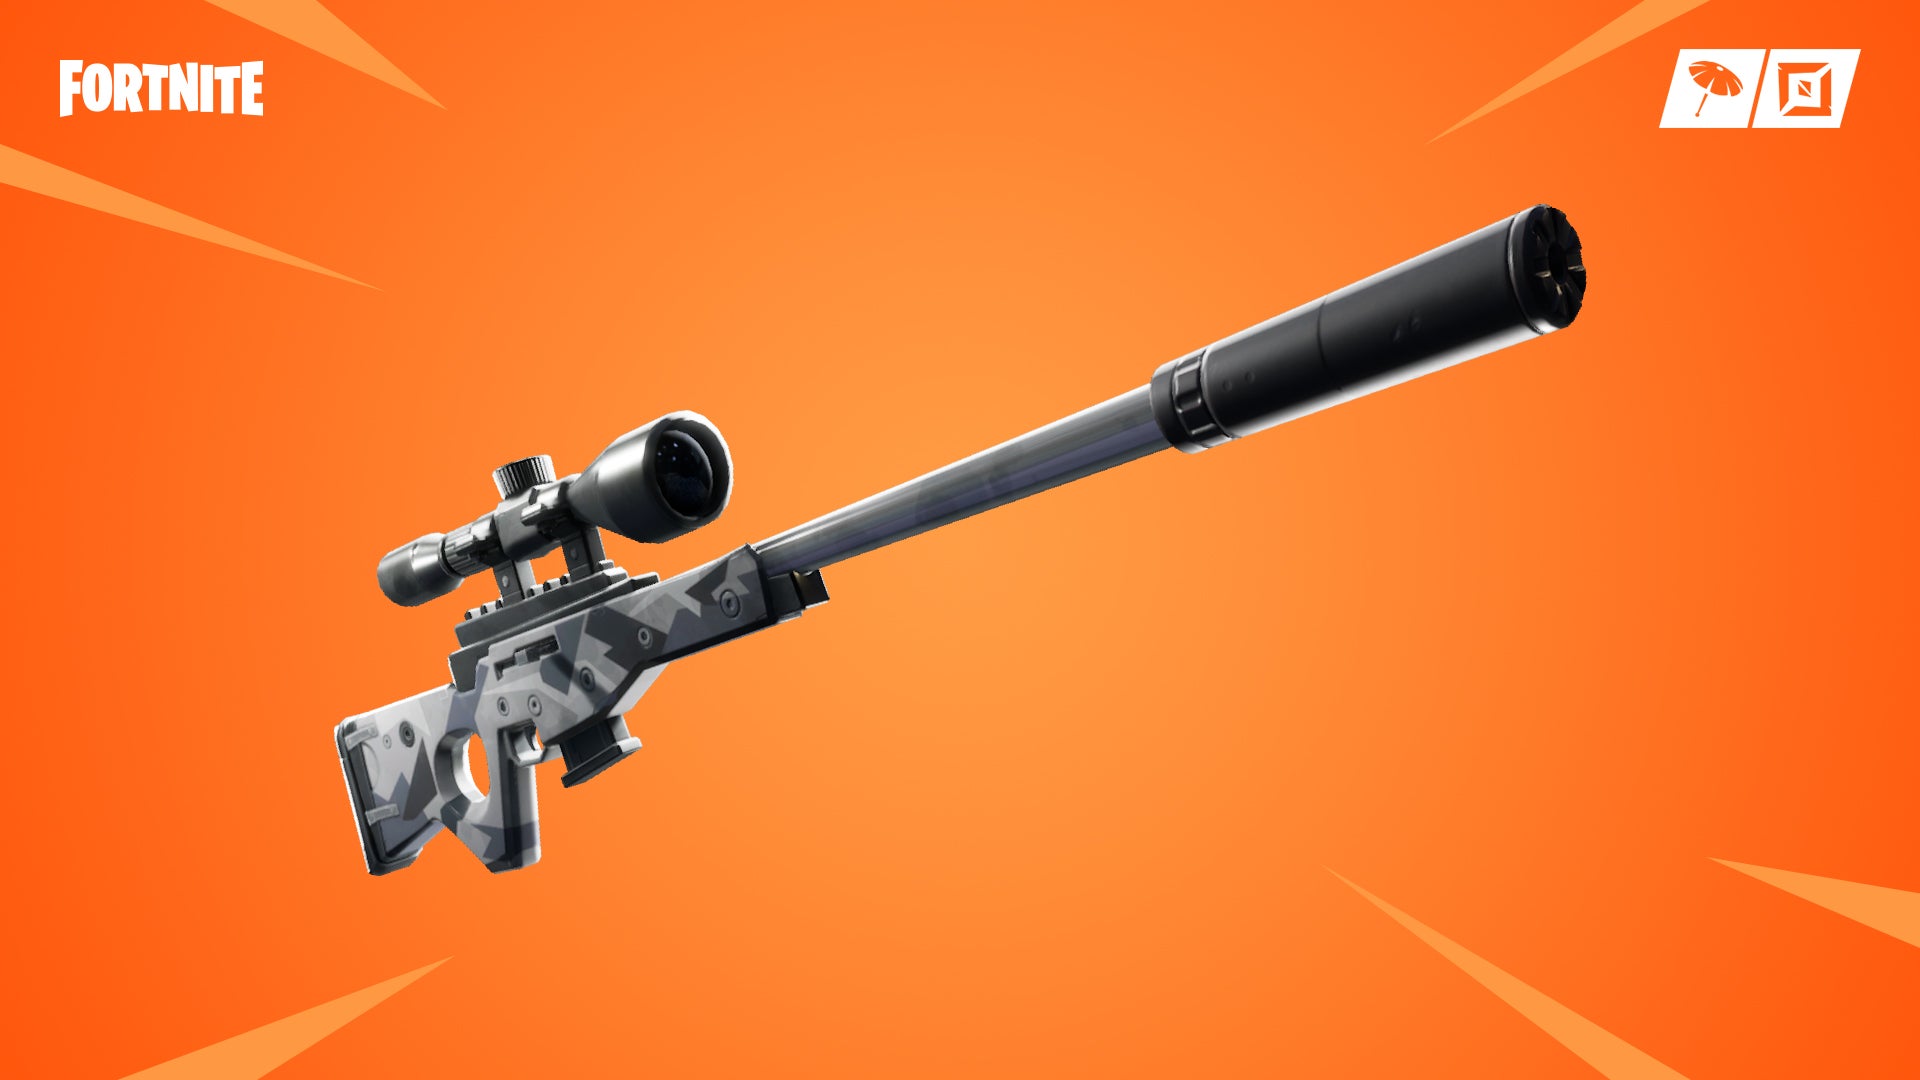 Image for Fortnite: v7.10 update adds Suppressed Sniper Rifle, Popshot Shotgun and changes to The Block